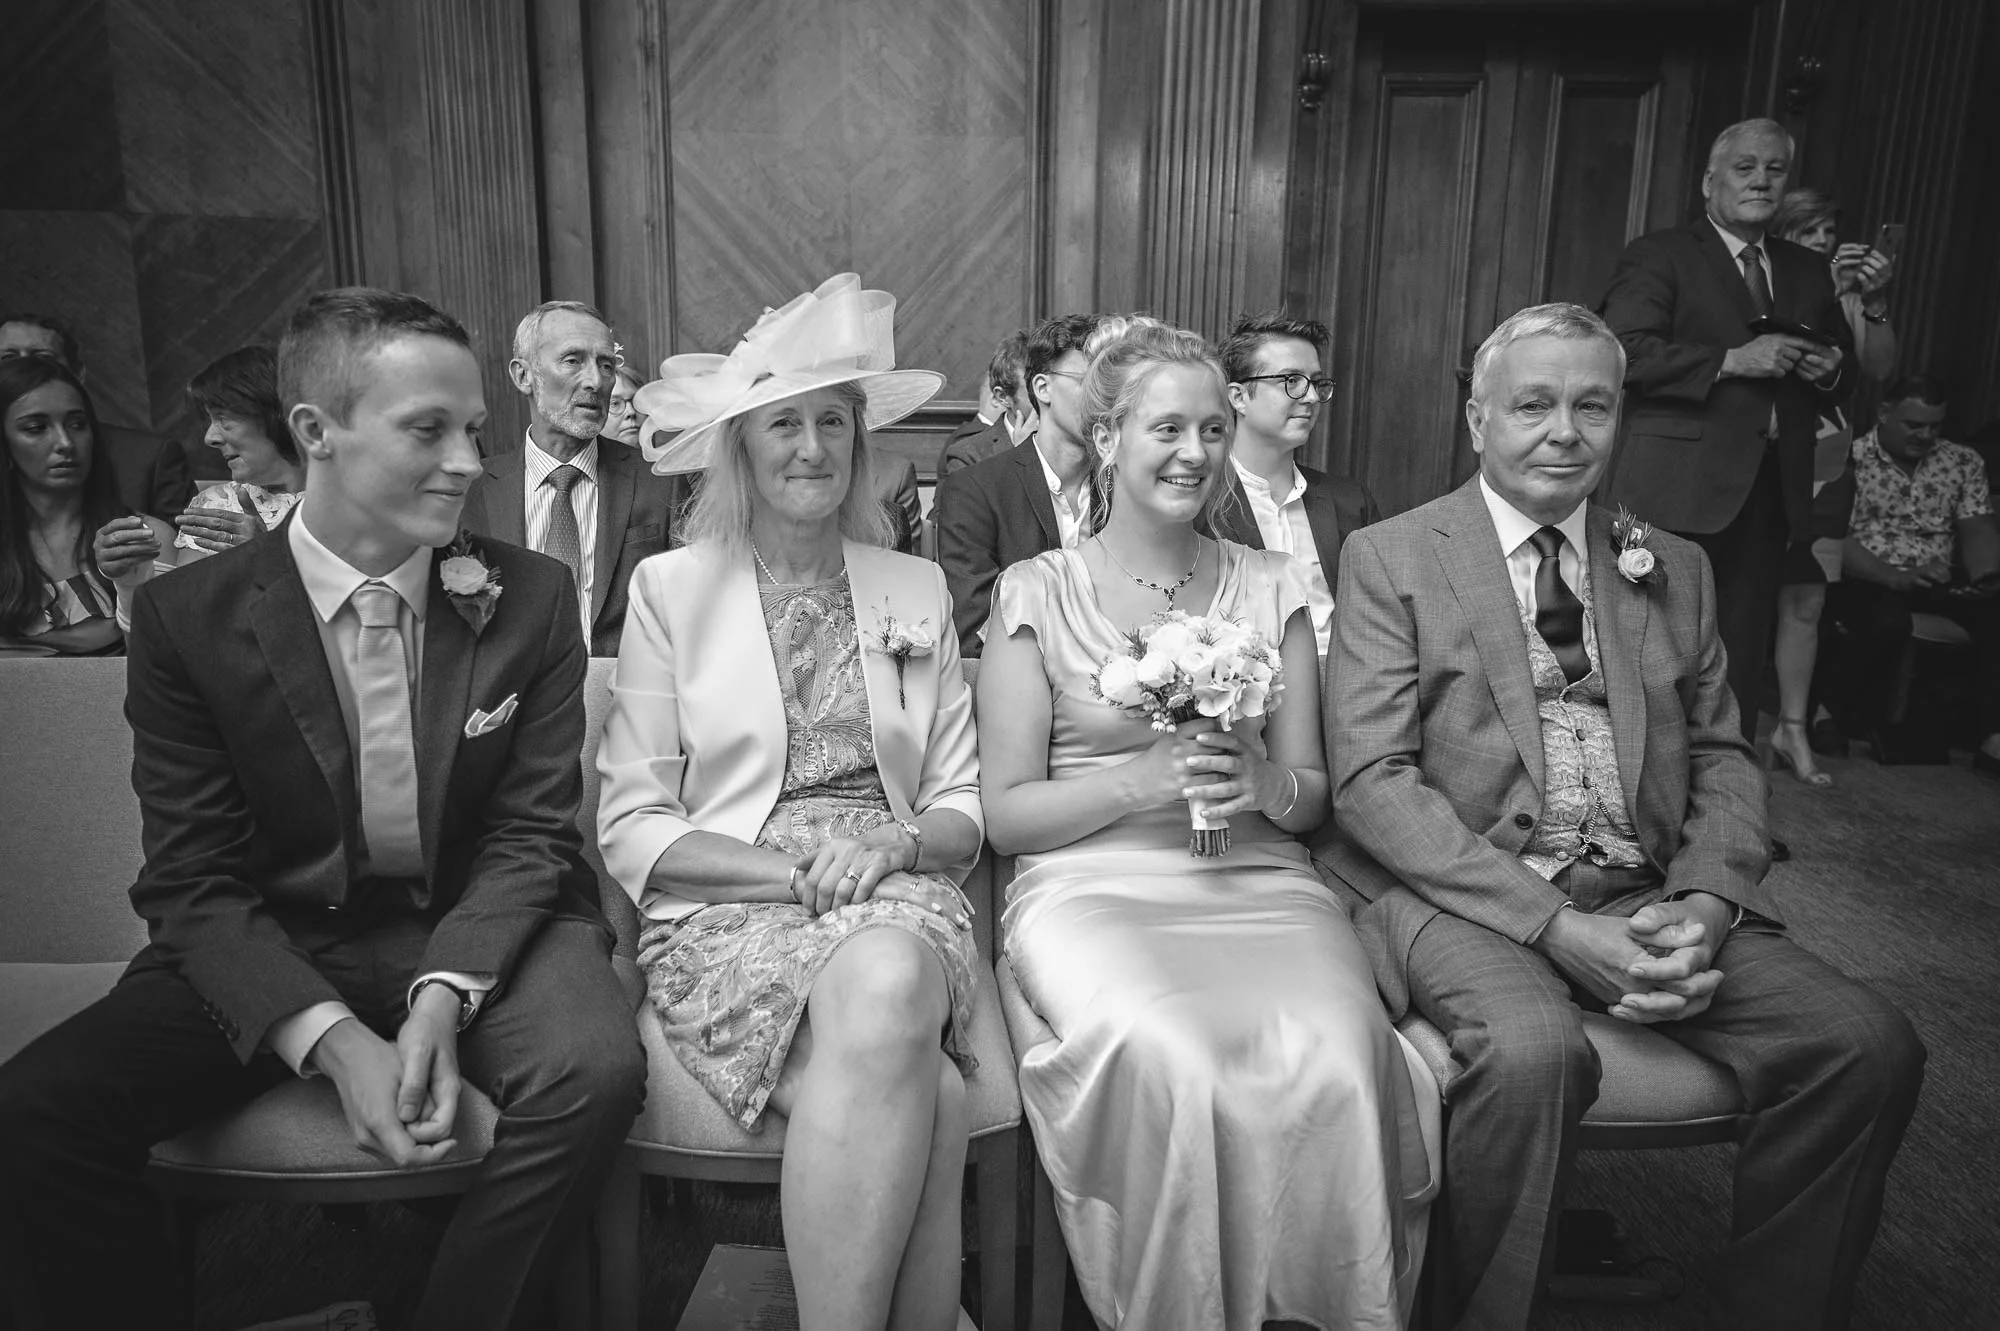 fire bryllupsgæster foran ægteskab på Old Marylebone Rådhus, London